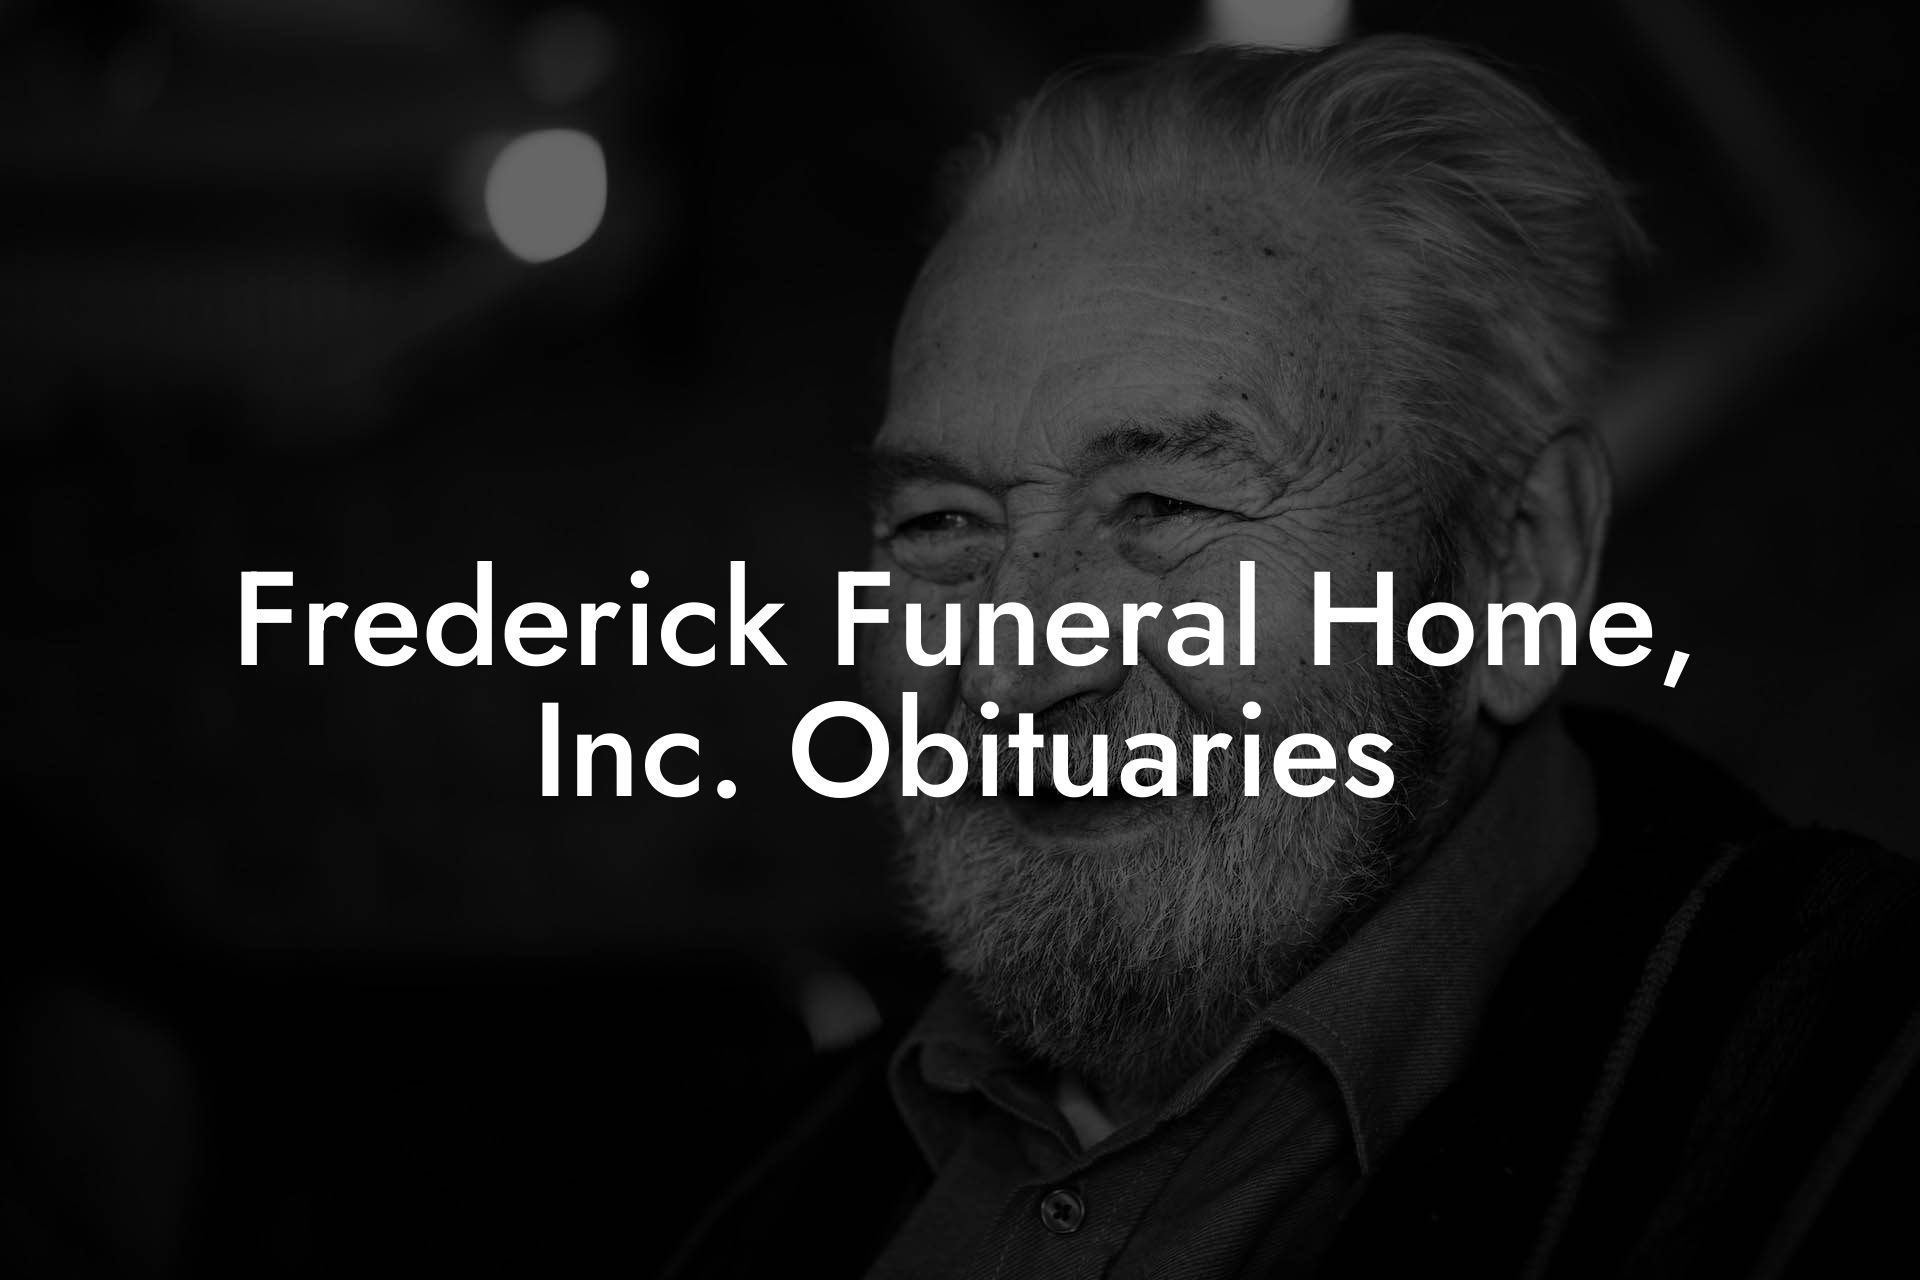 Frederick Funeral Home, Inc. Obituaries